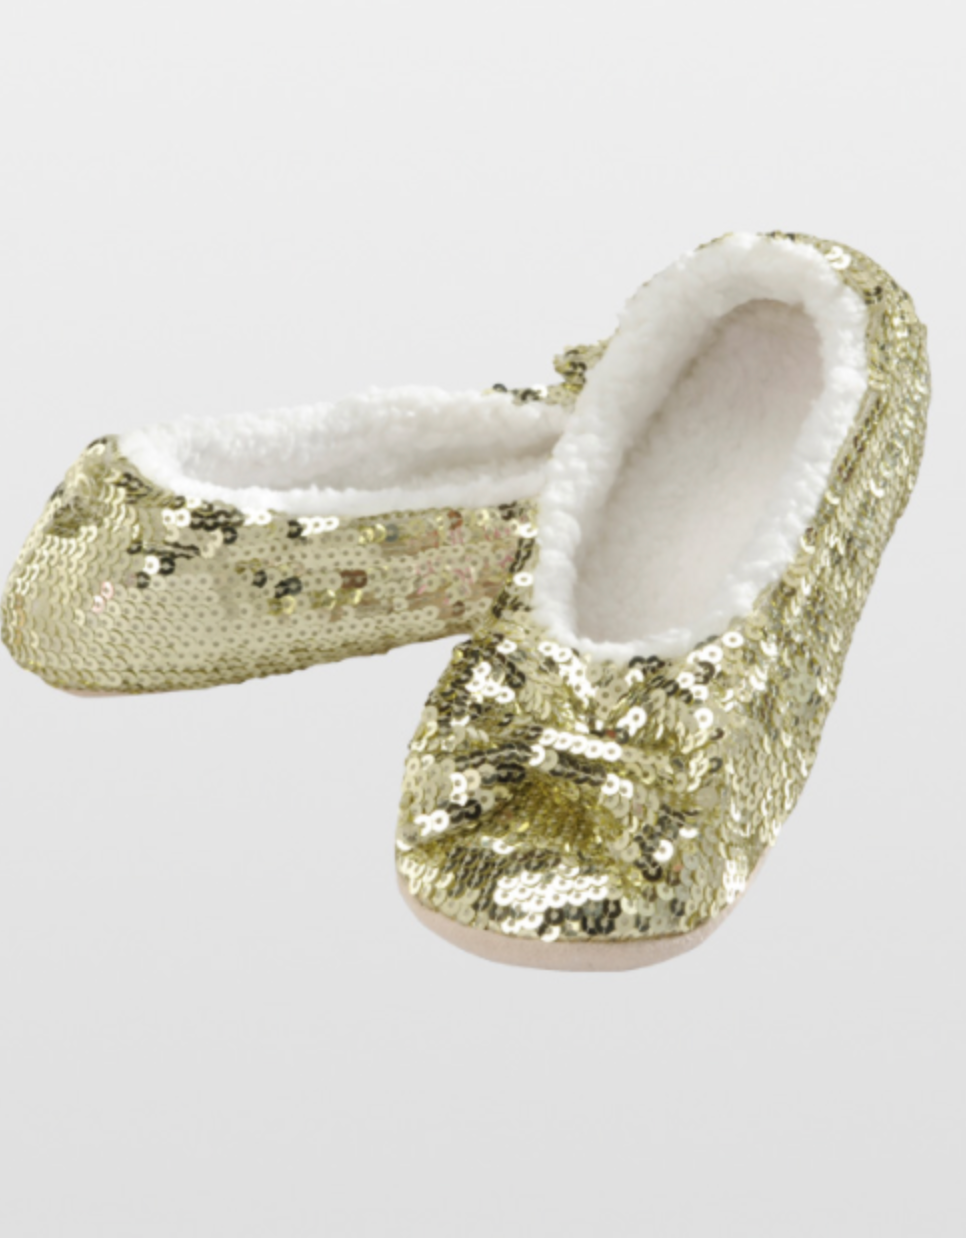 sparkly ballerina slippers